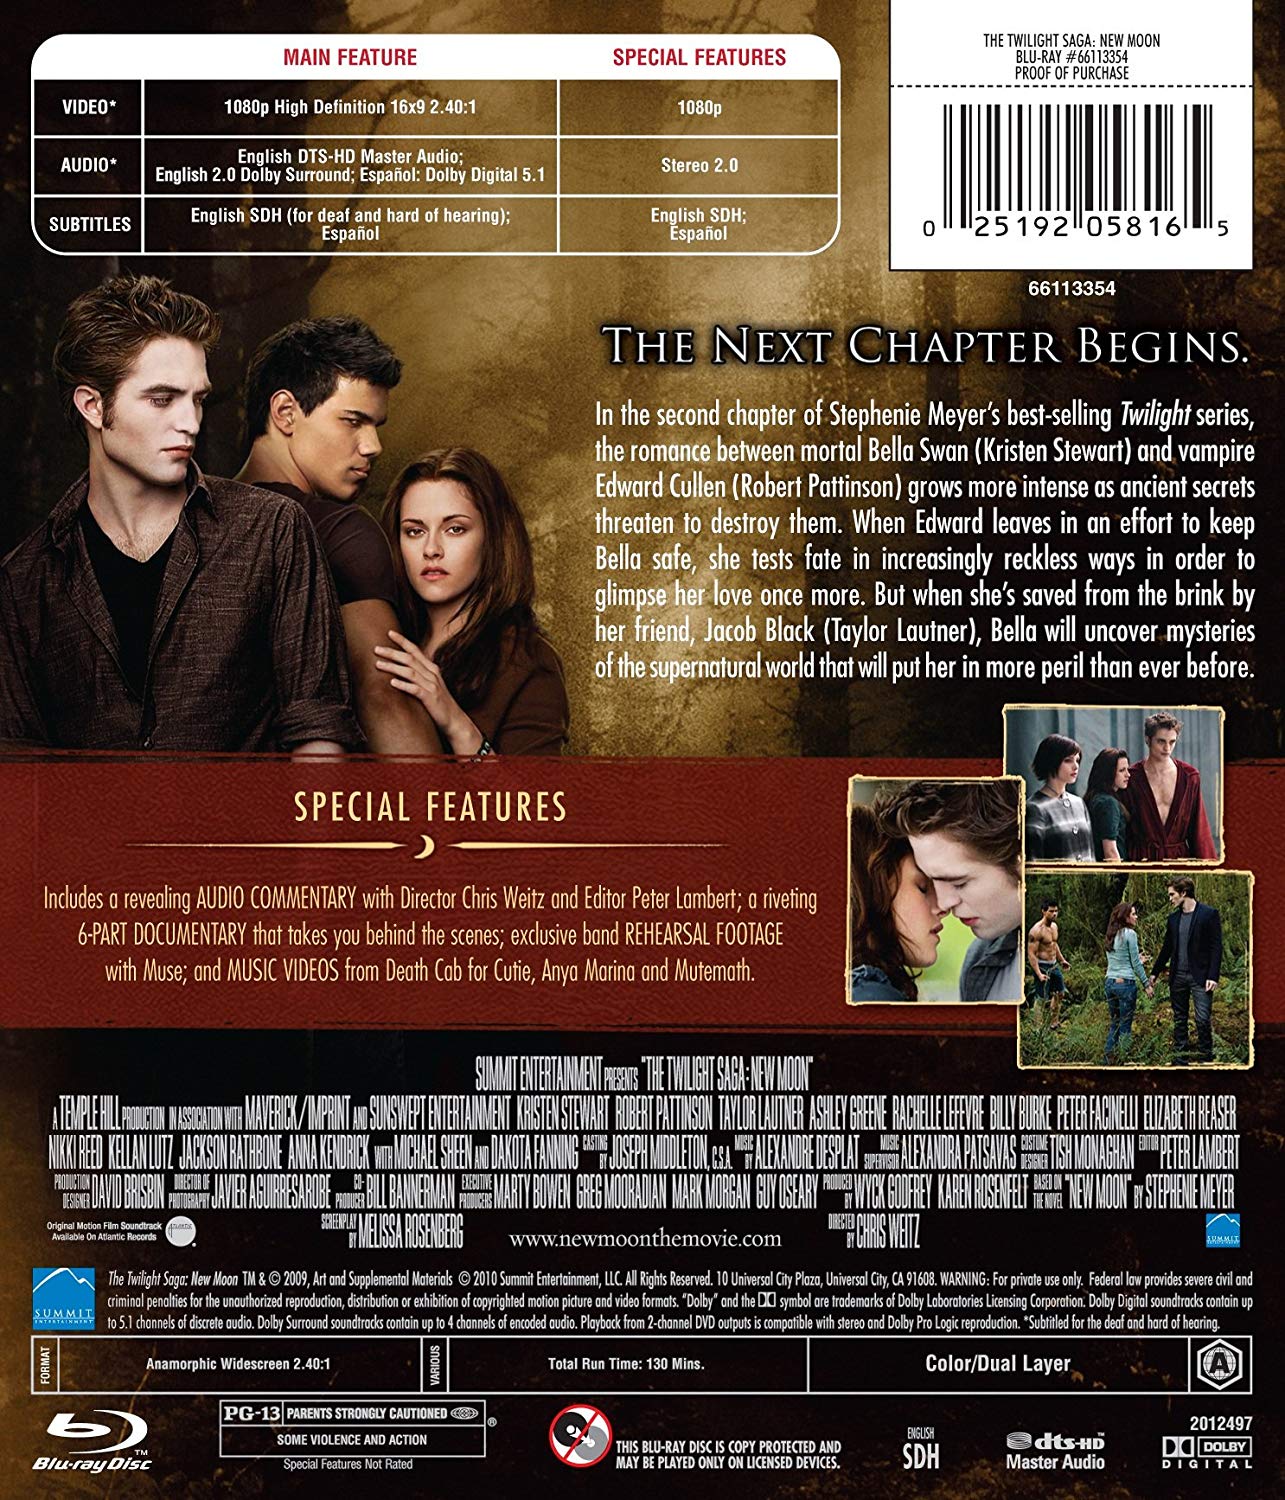 The Twilight Saga: New Moon (Blu-ray), Summit Inc/Lionsgate, Drama - image 2 of 2